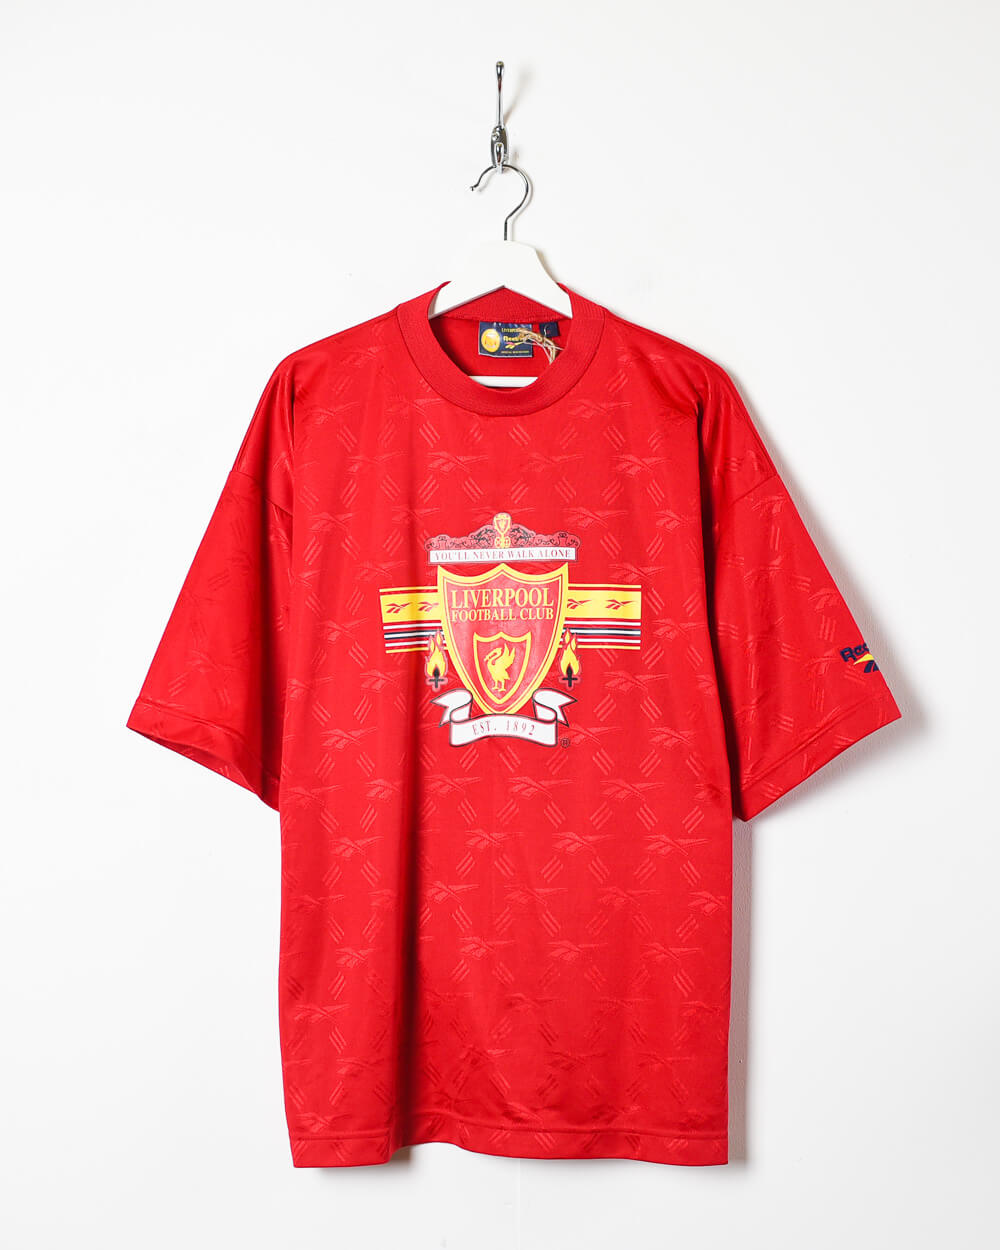 Red Reebok Liverpool Training T-Shirt - X-Large